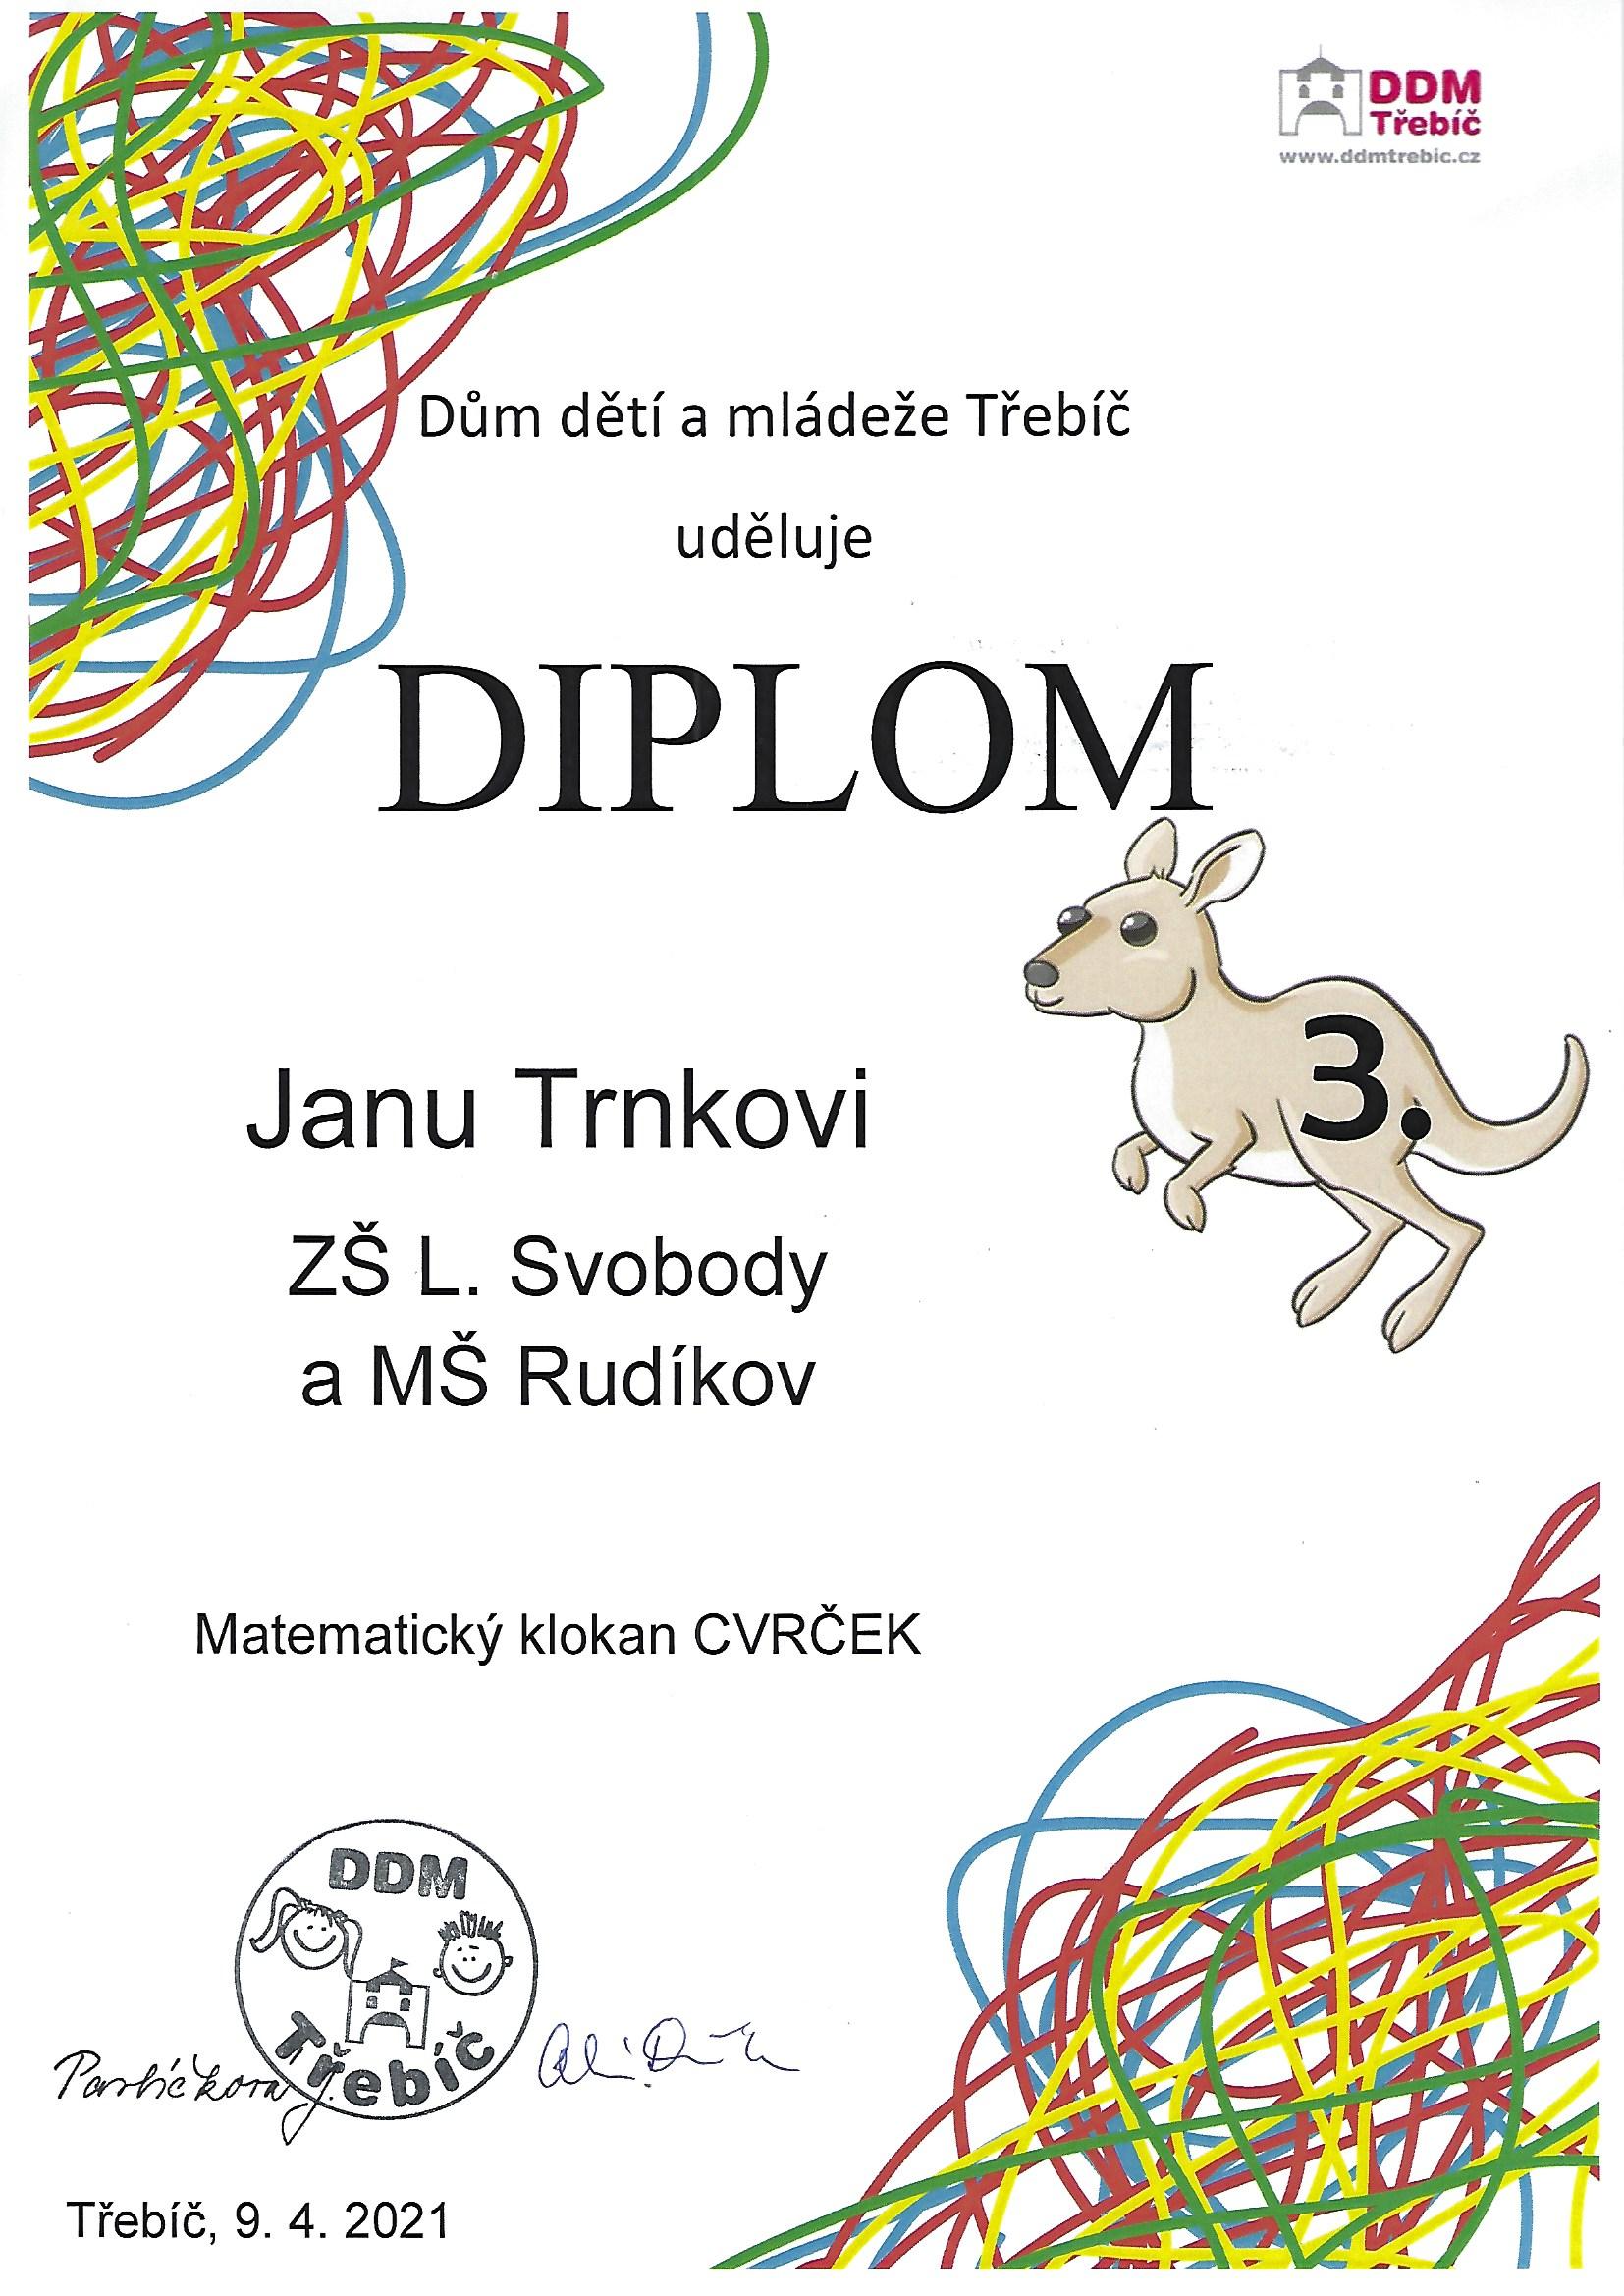 Diplom pro Jana Trnku